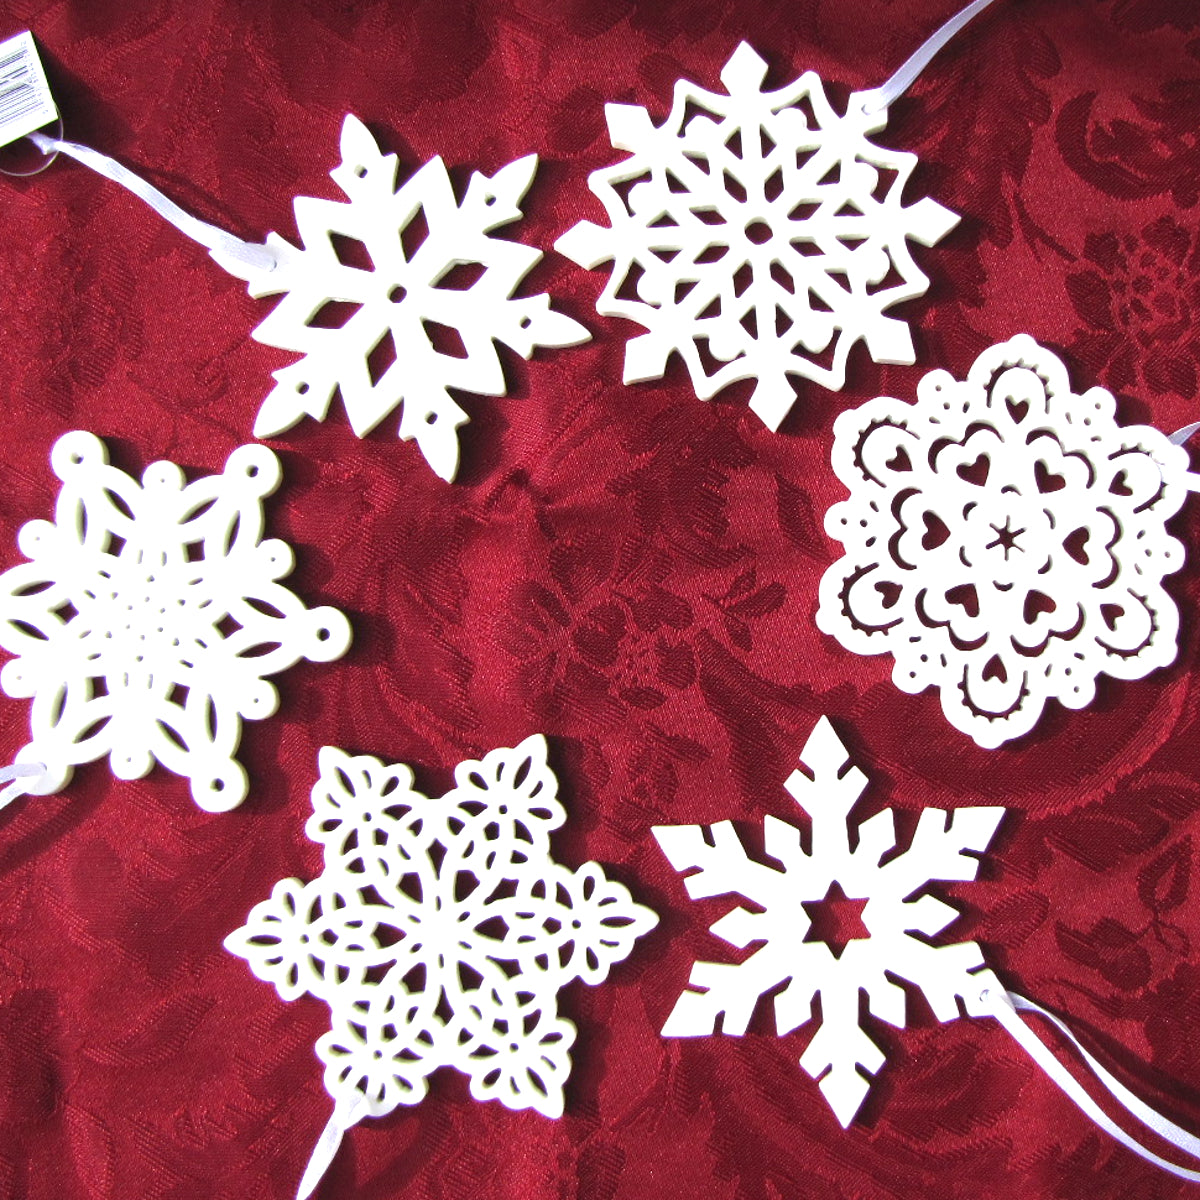 EK Jolee's Boutique Bling Snowflakes